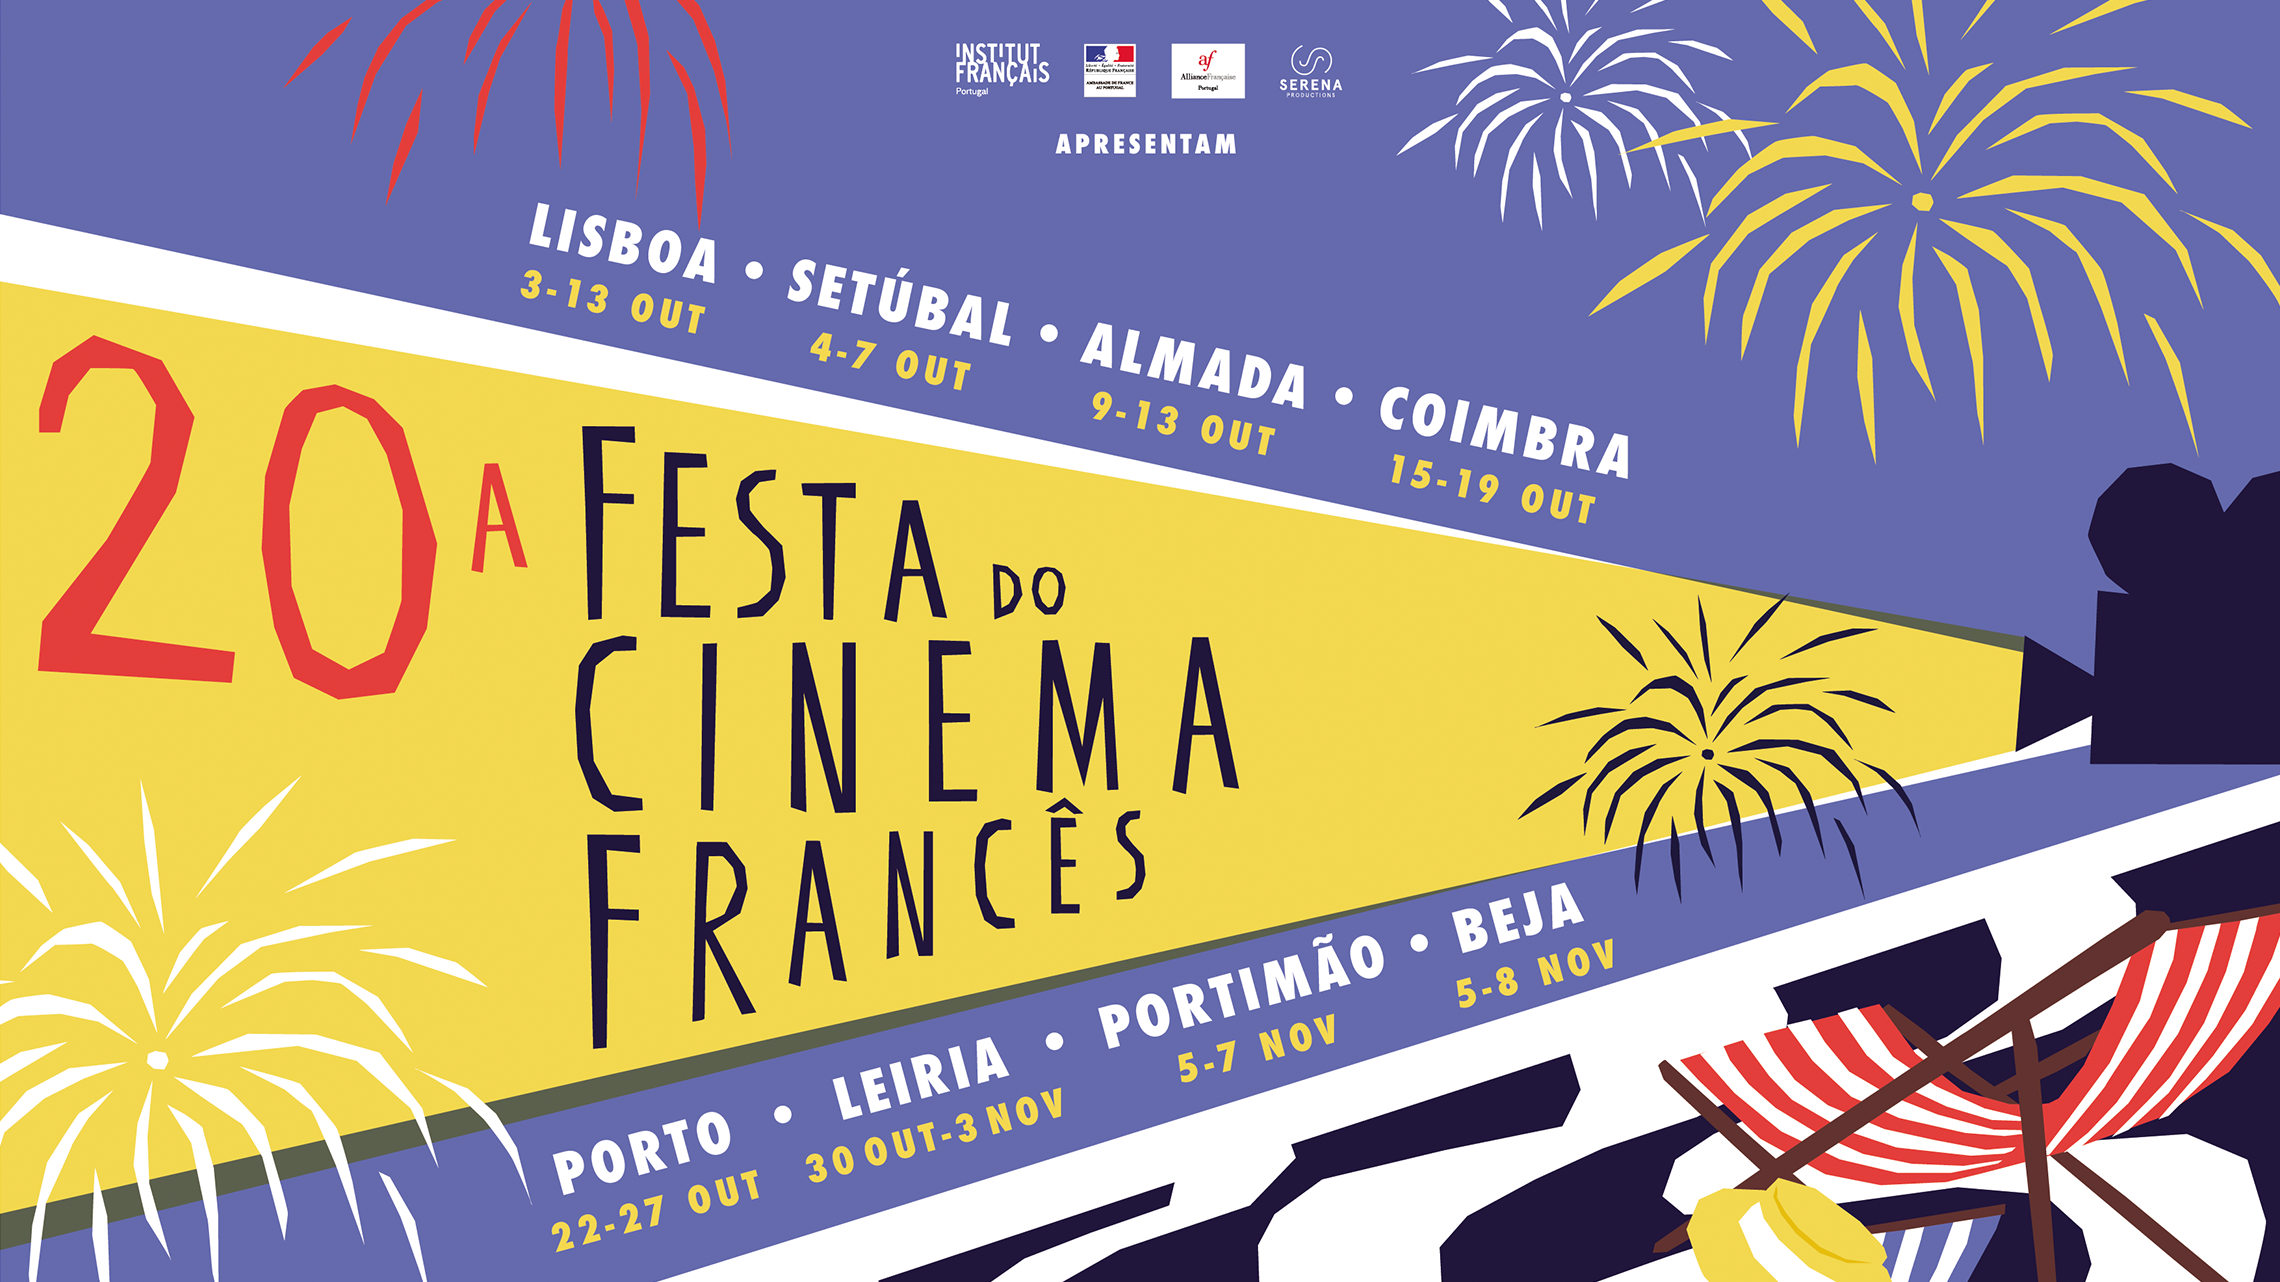 INFOS ÚTEIS  Festa Cinema Frances